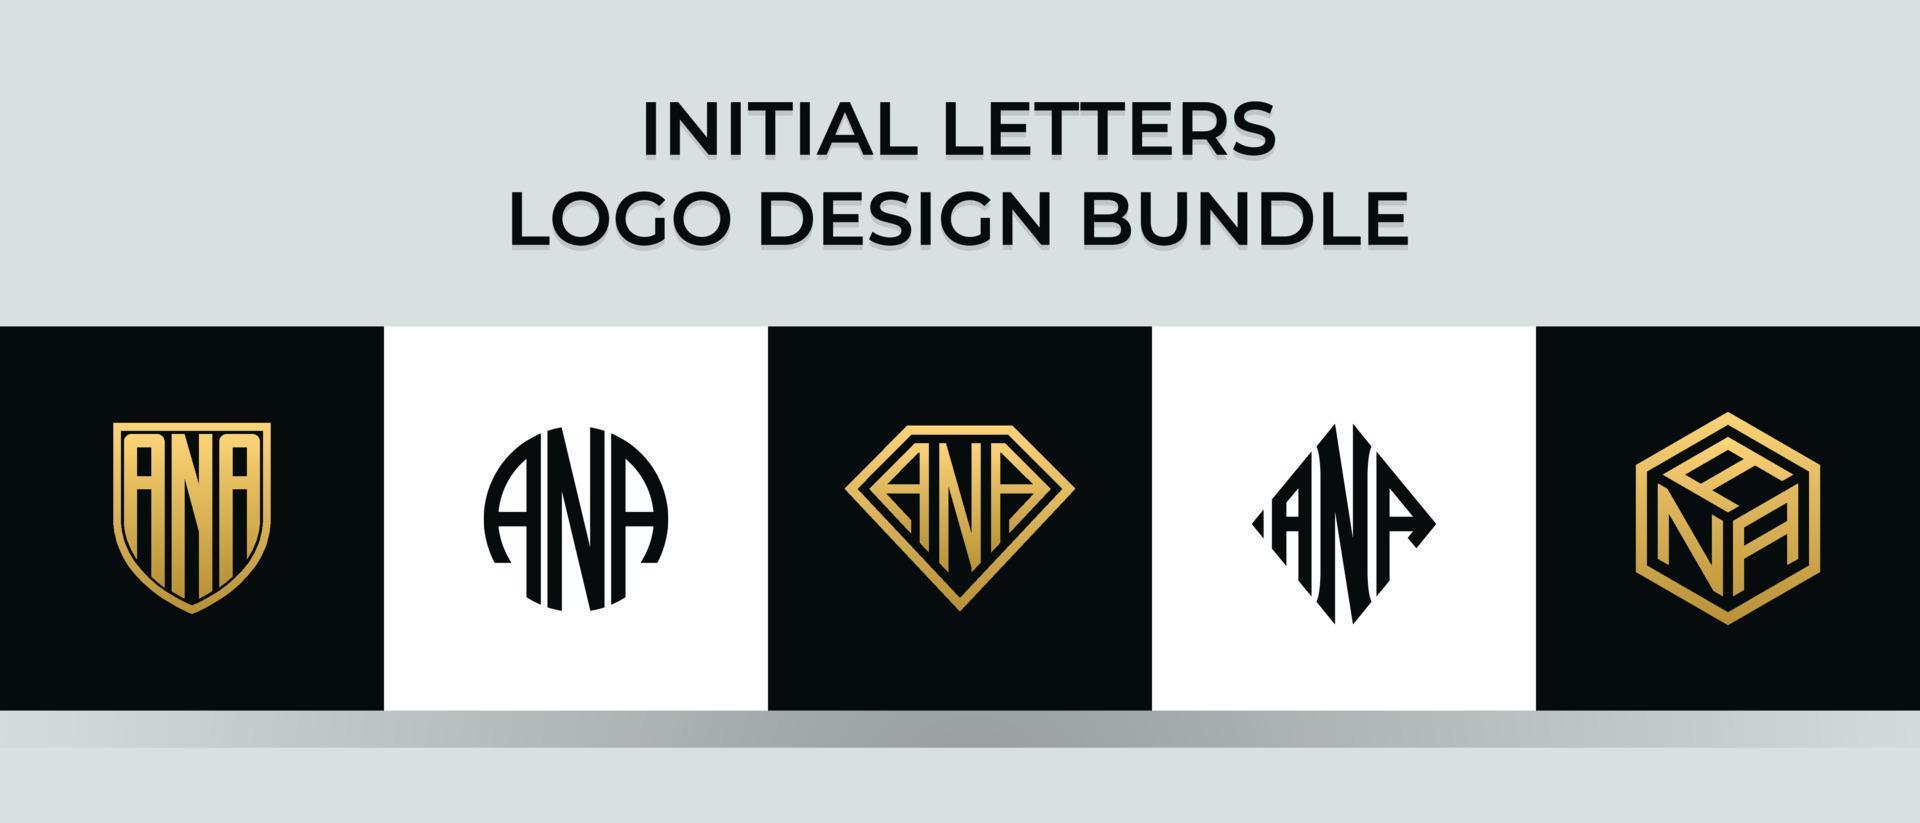 Initial letters ANA logo designs Bundle vector